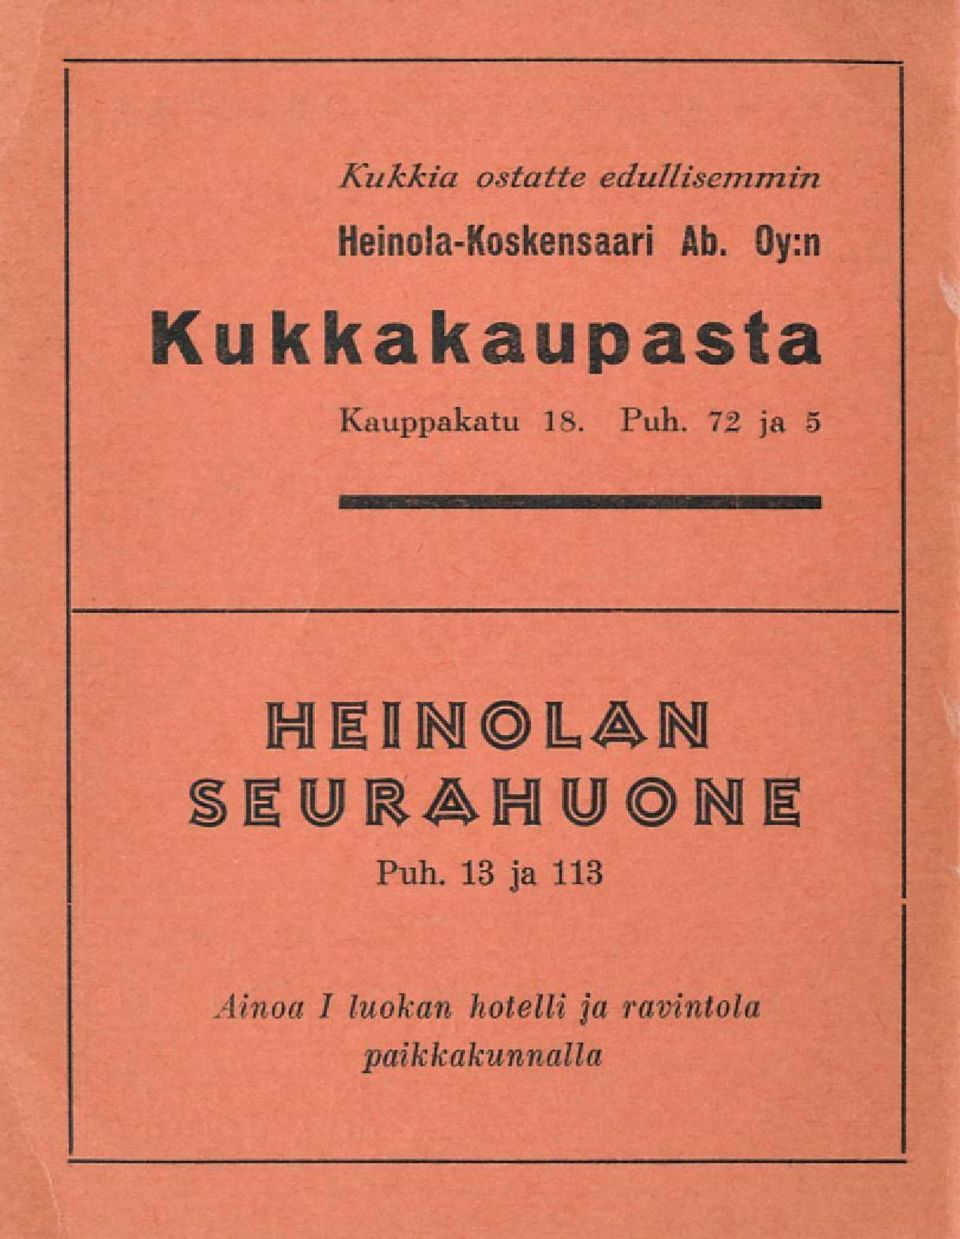 Oy:n Kukkakaupasta Kauppakatu 18. Puh.